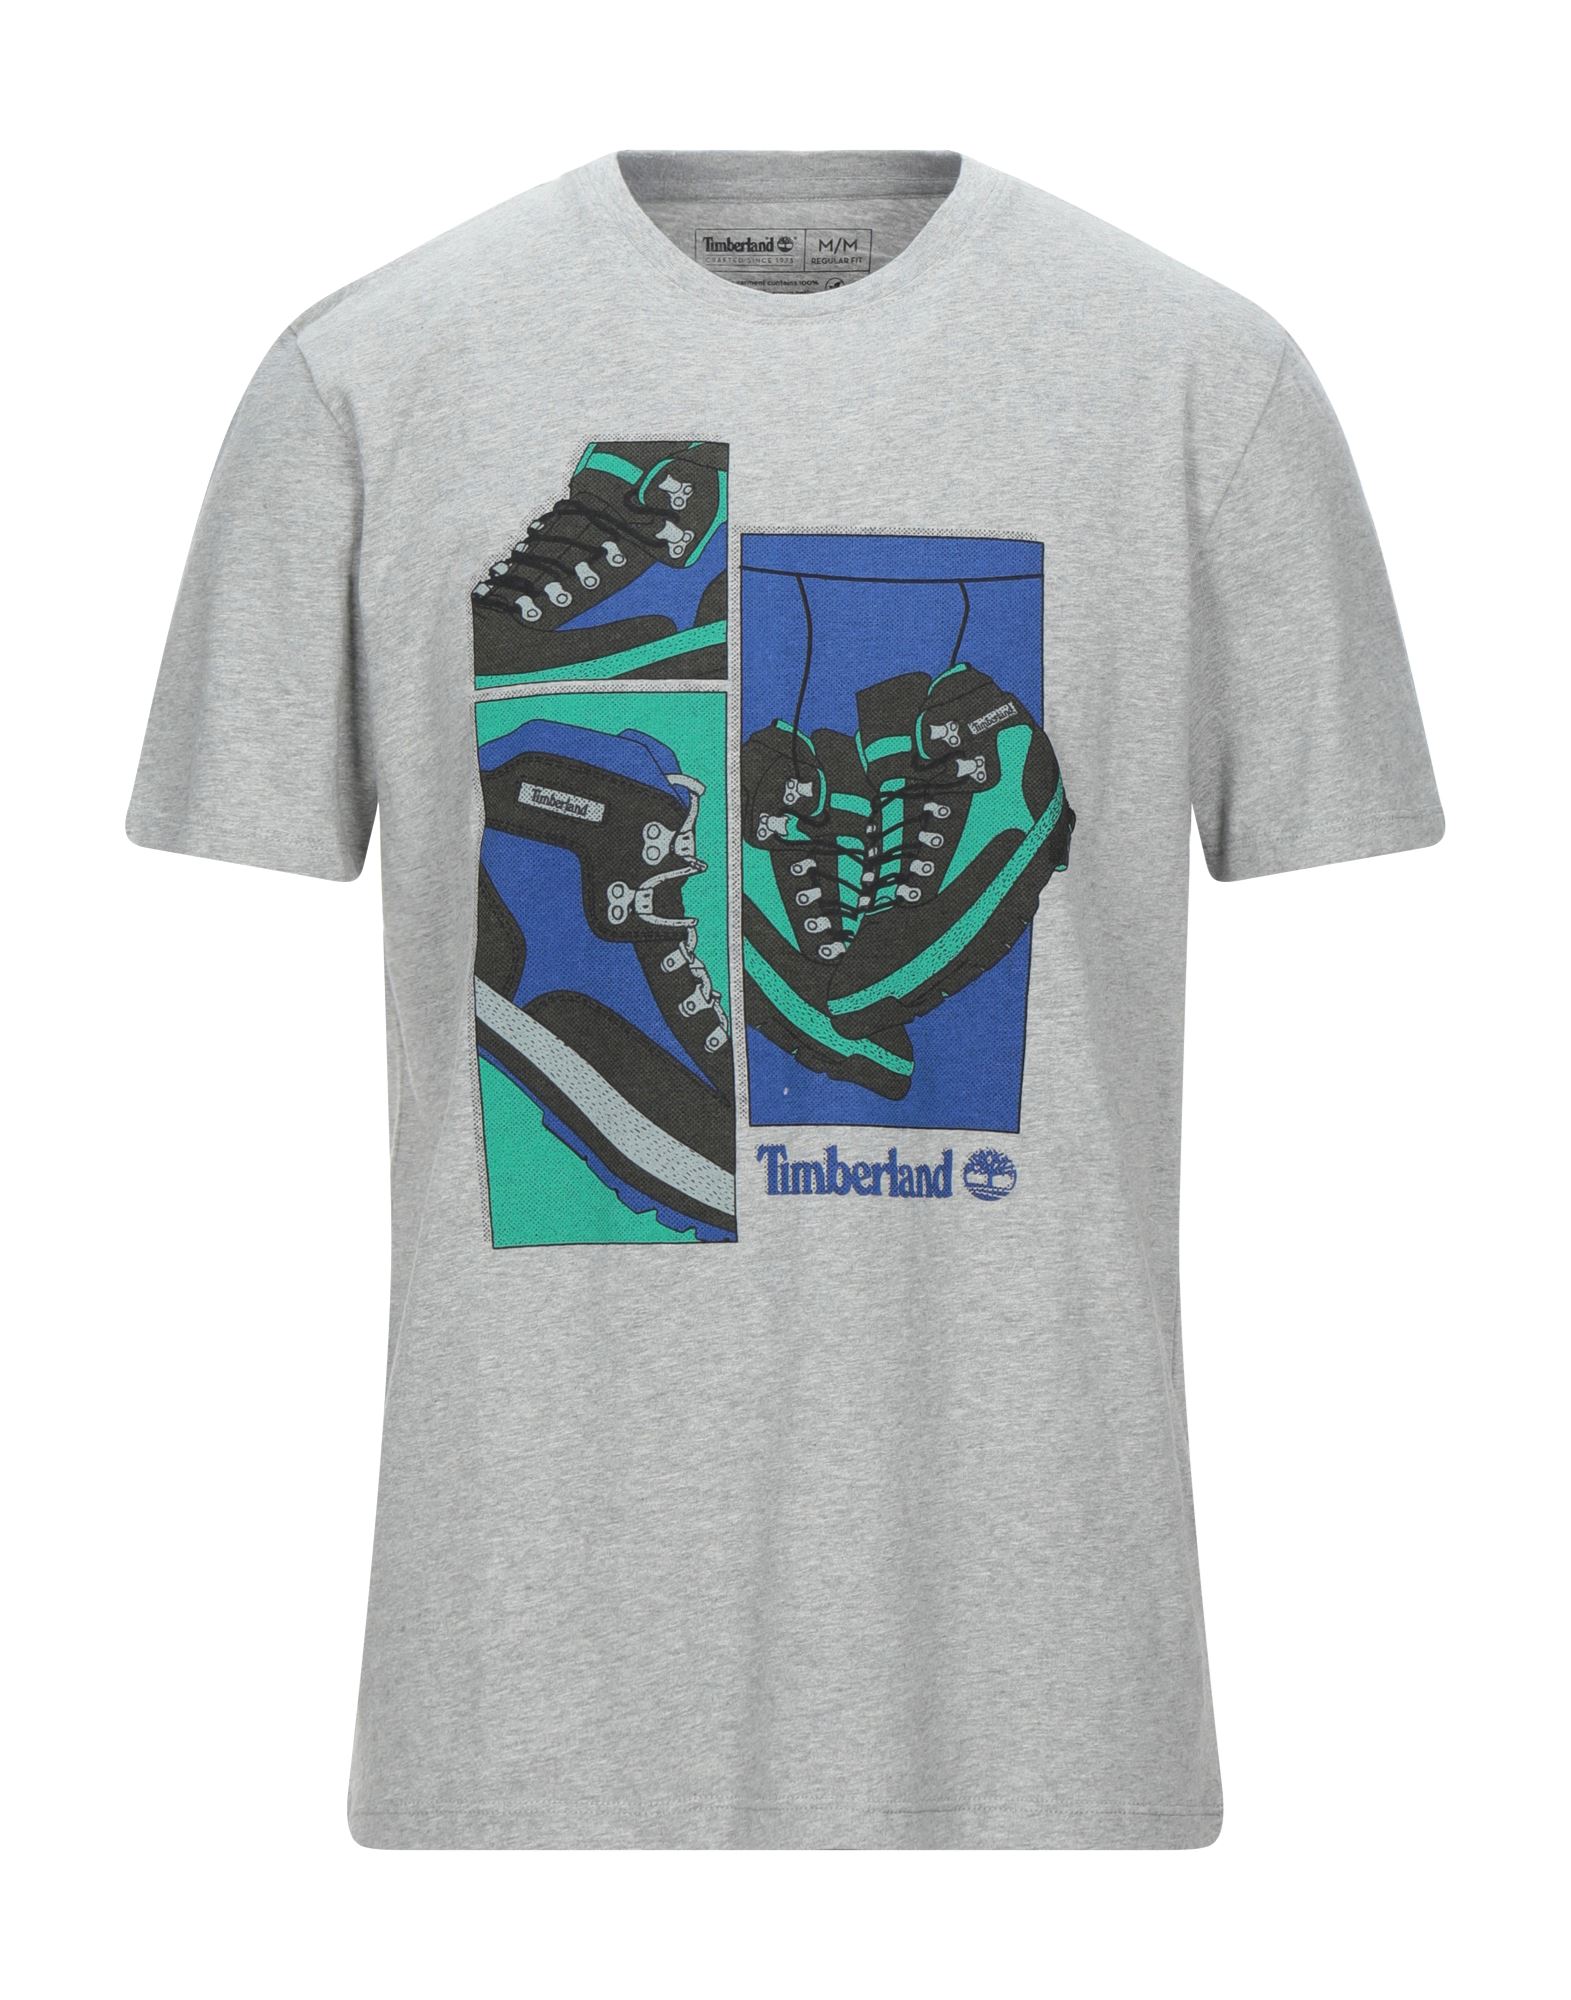 TIMBERLAND T-shirts - Item 12536645